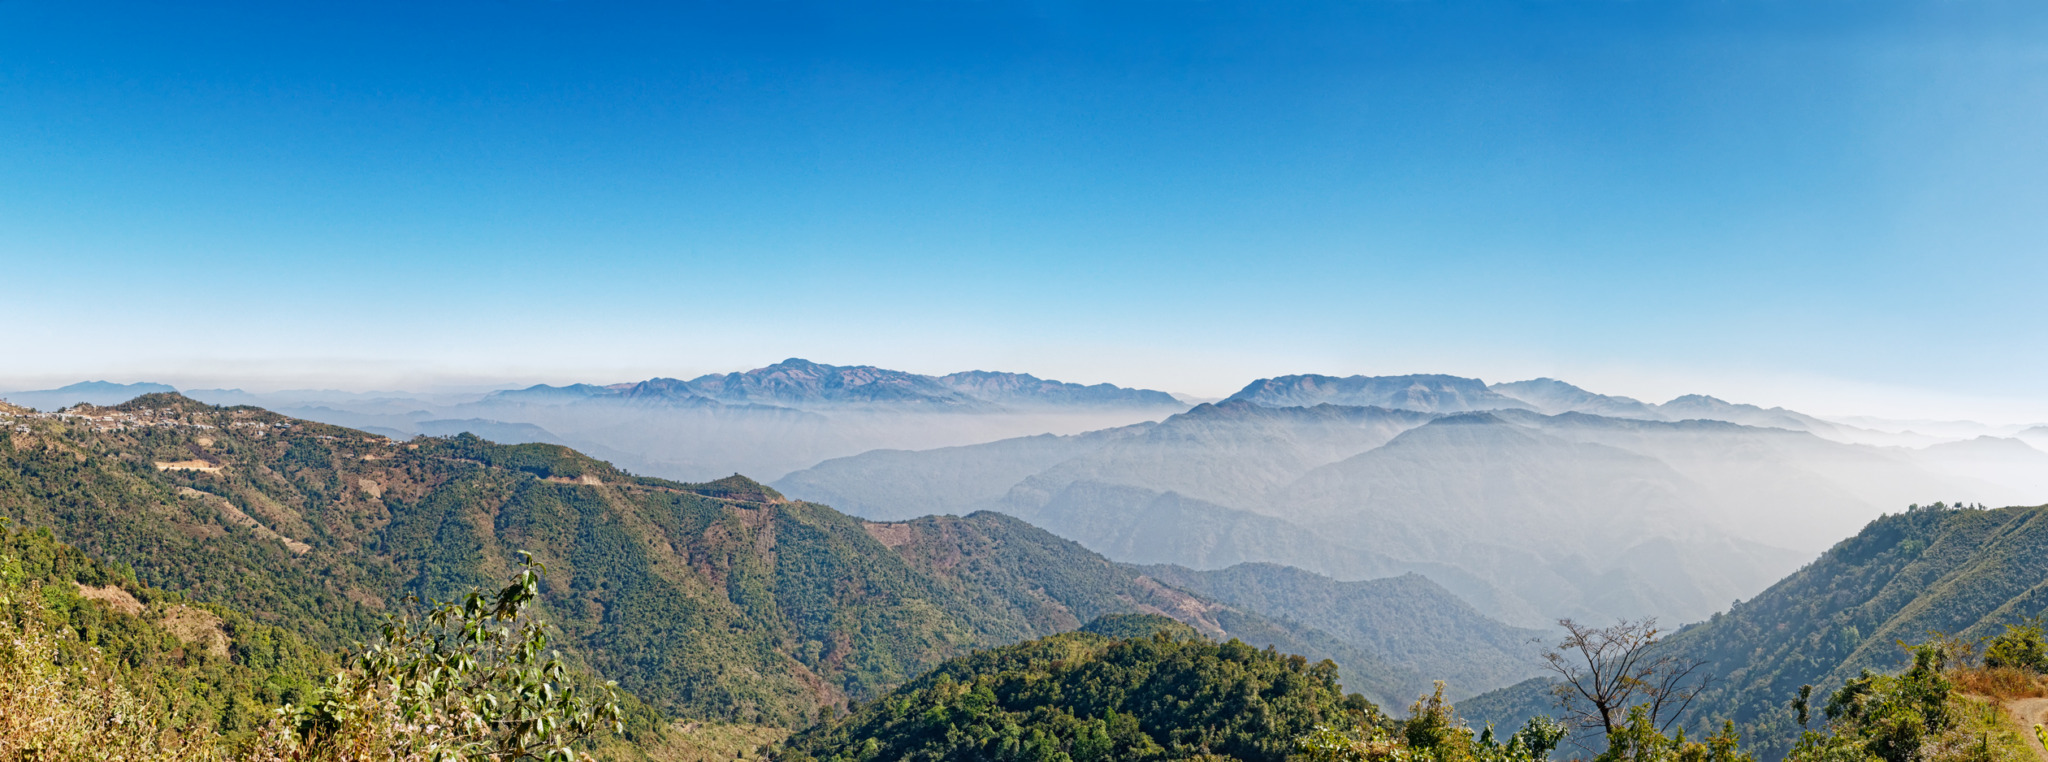 A view of the Arakan range in Myanmar from Mizoram